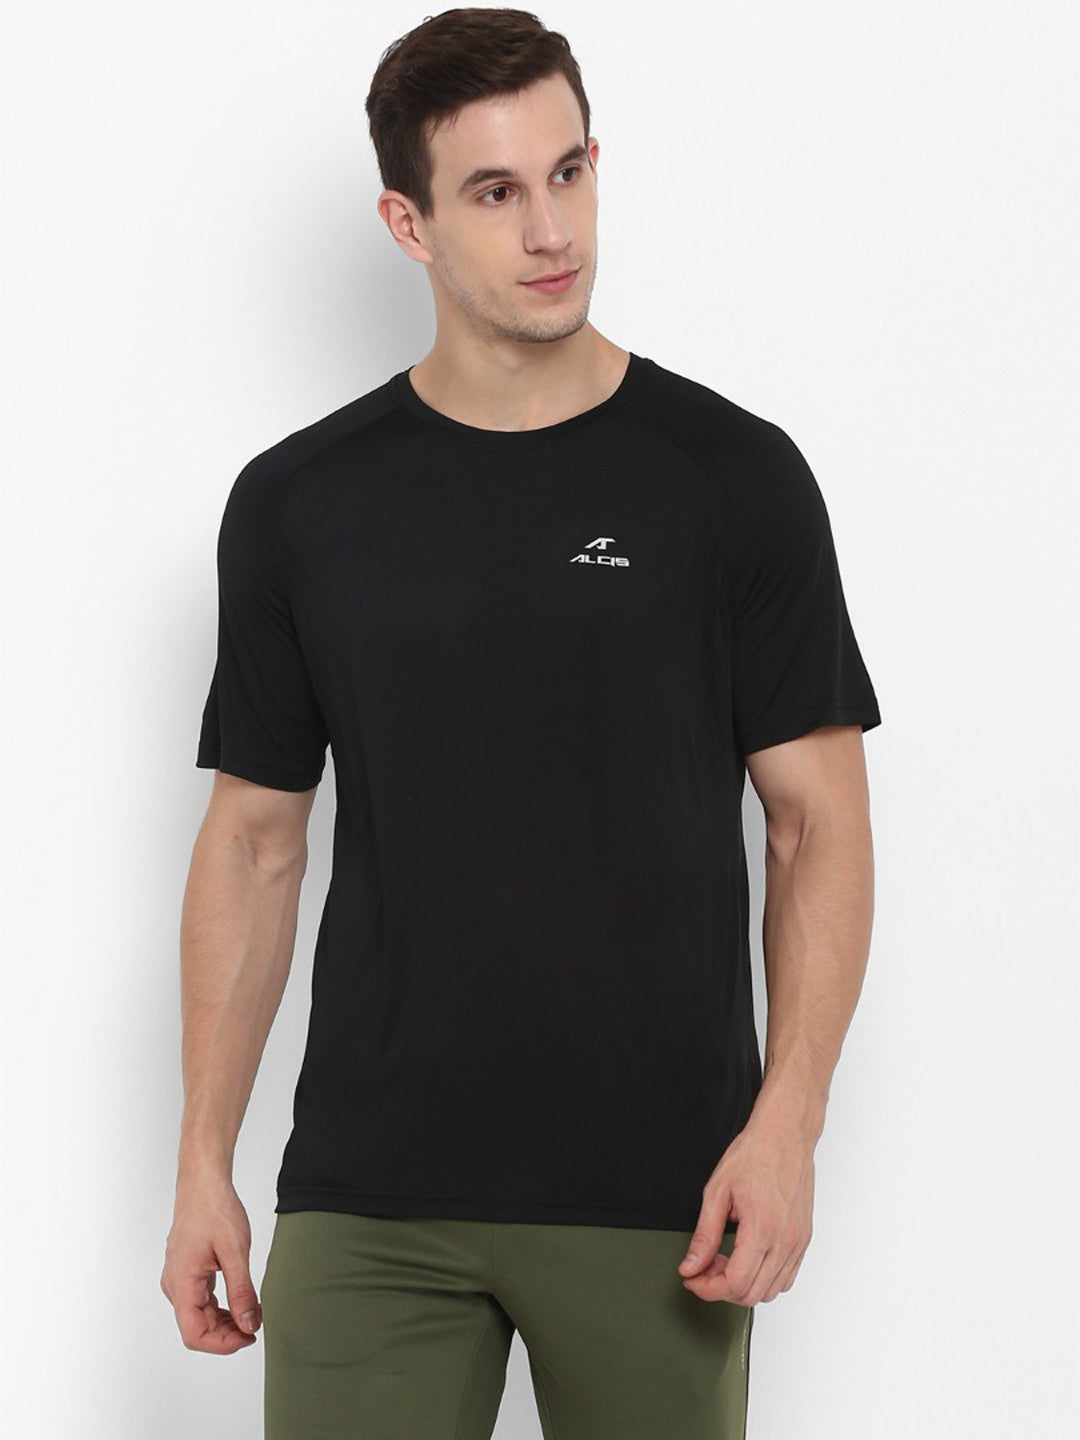 Alcis Black Solid Round Neck T-Shirt